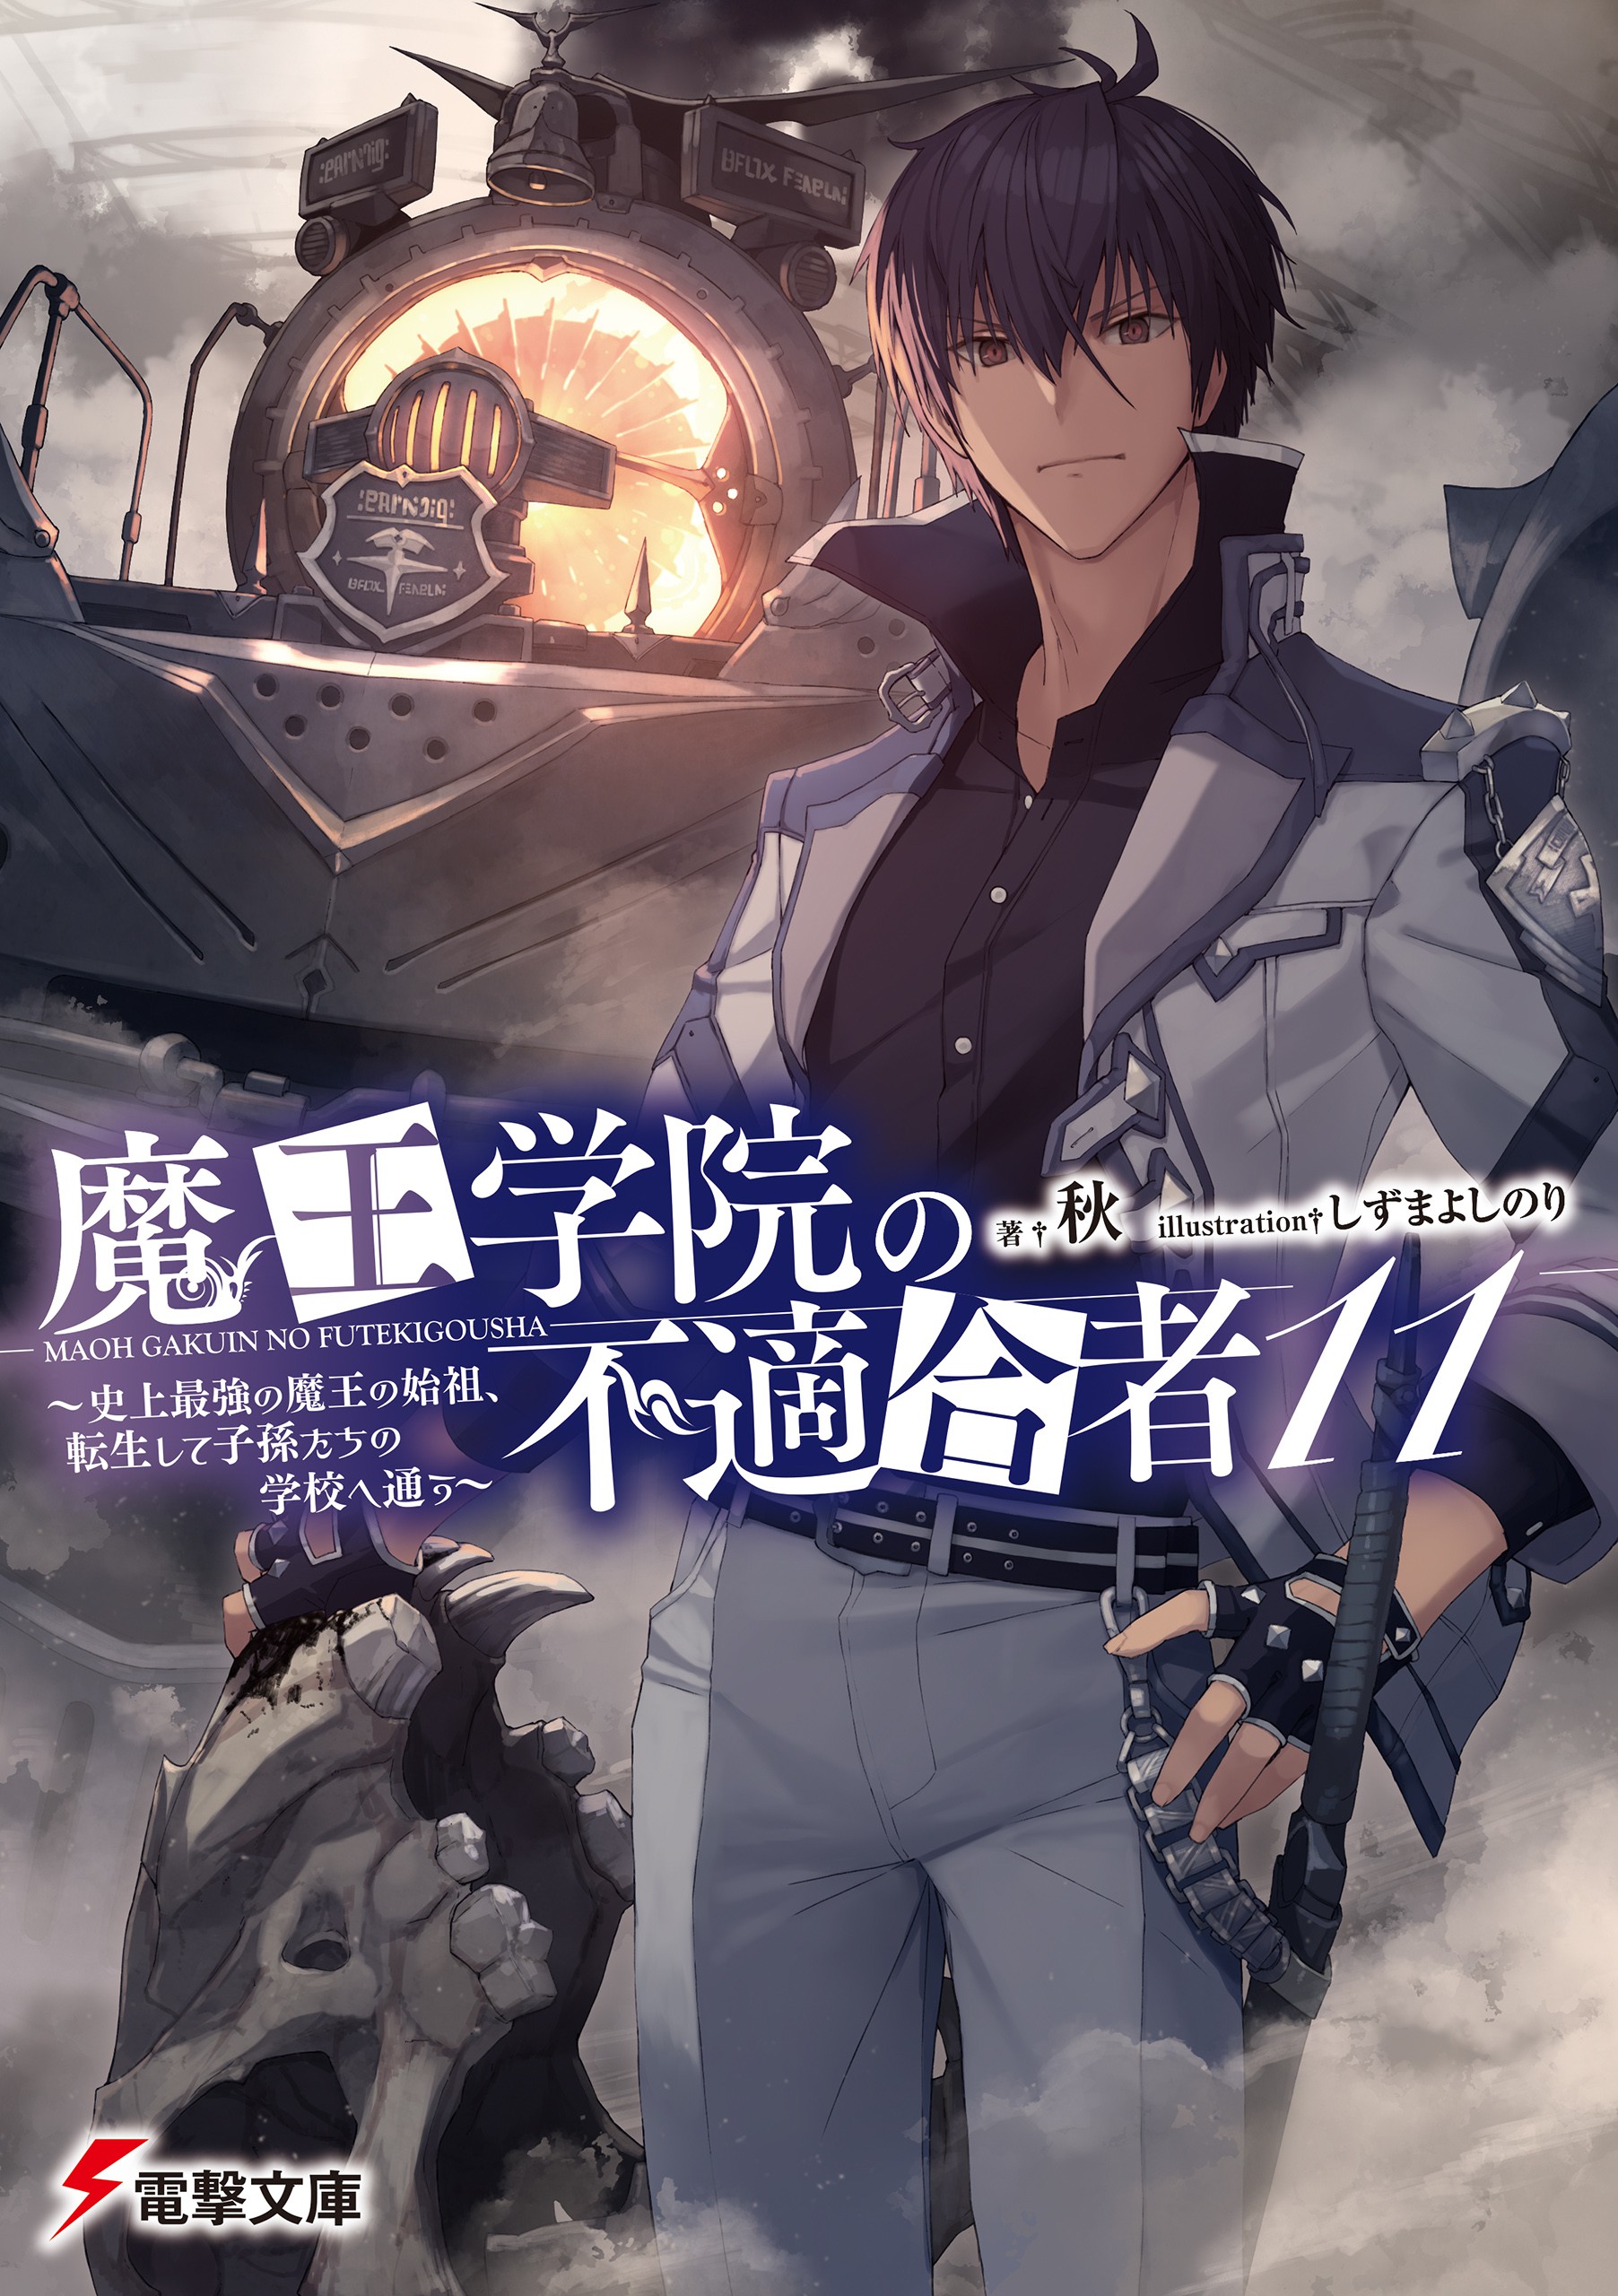 Light Novel Volume 11, Maou Gakuin Wiki